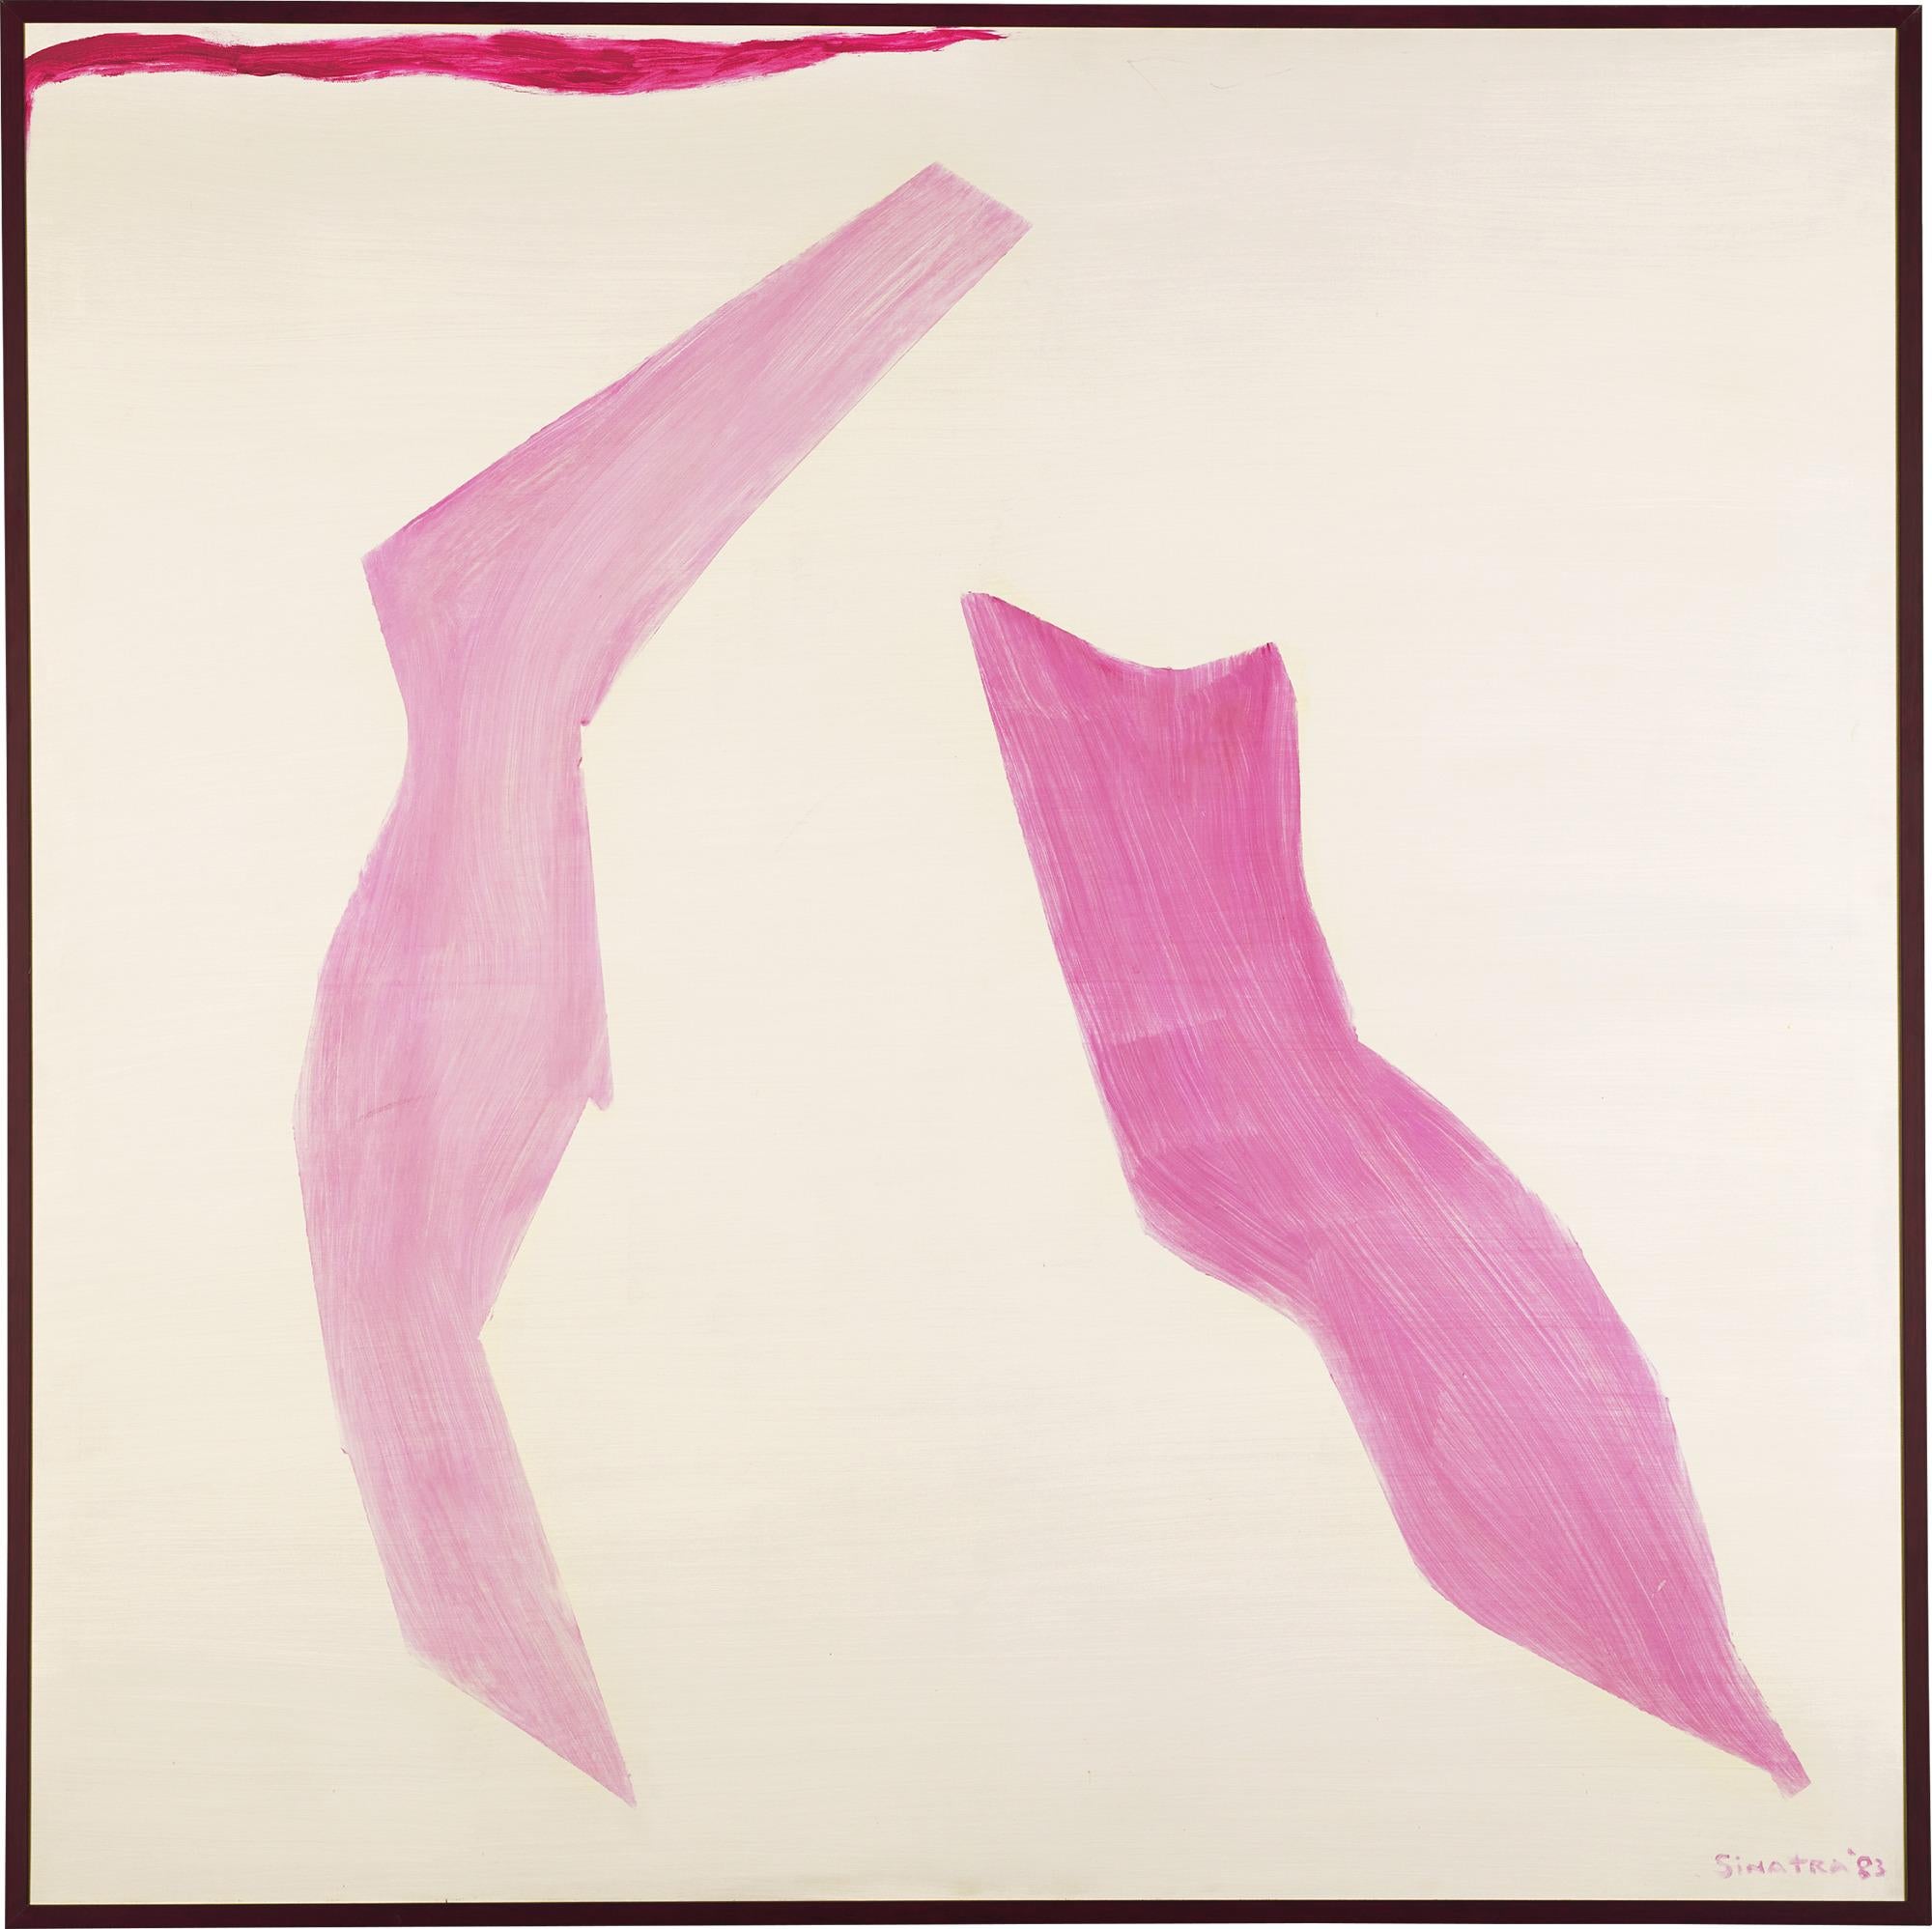 Abstrait rose, violet et blanc par Frank Sinatra 1